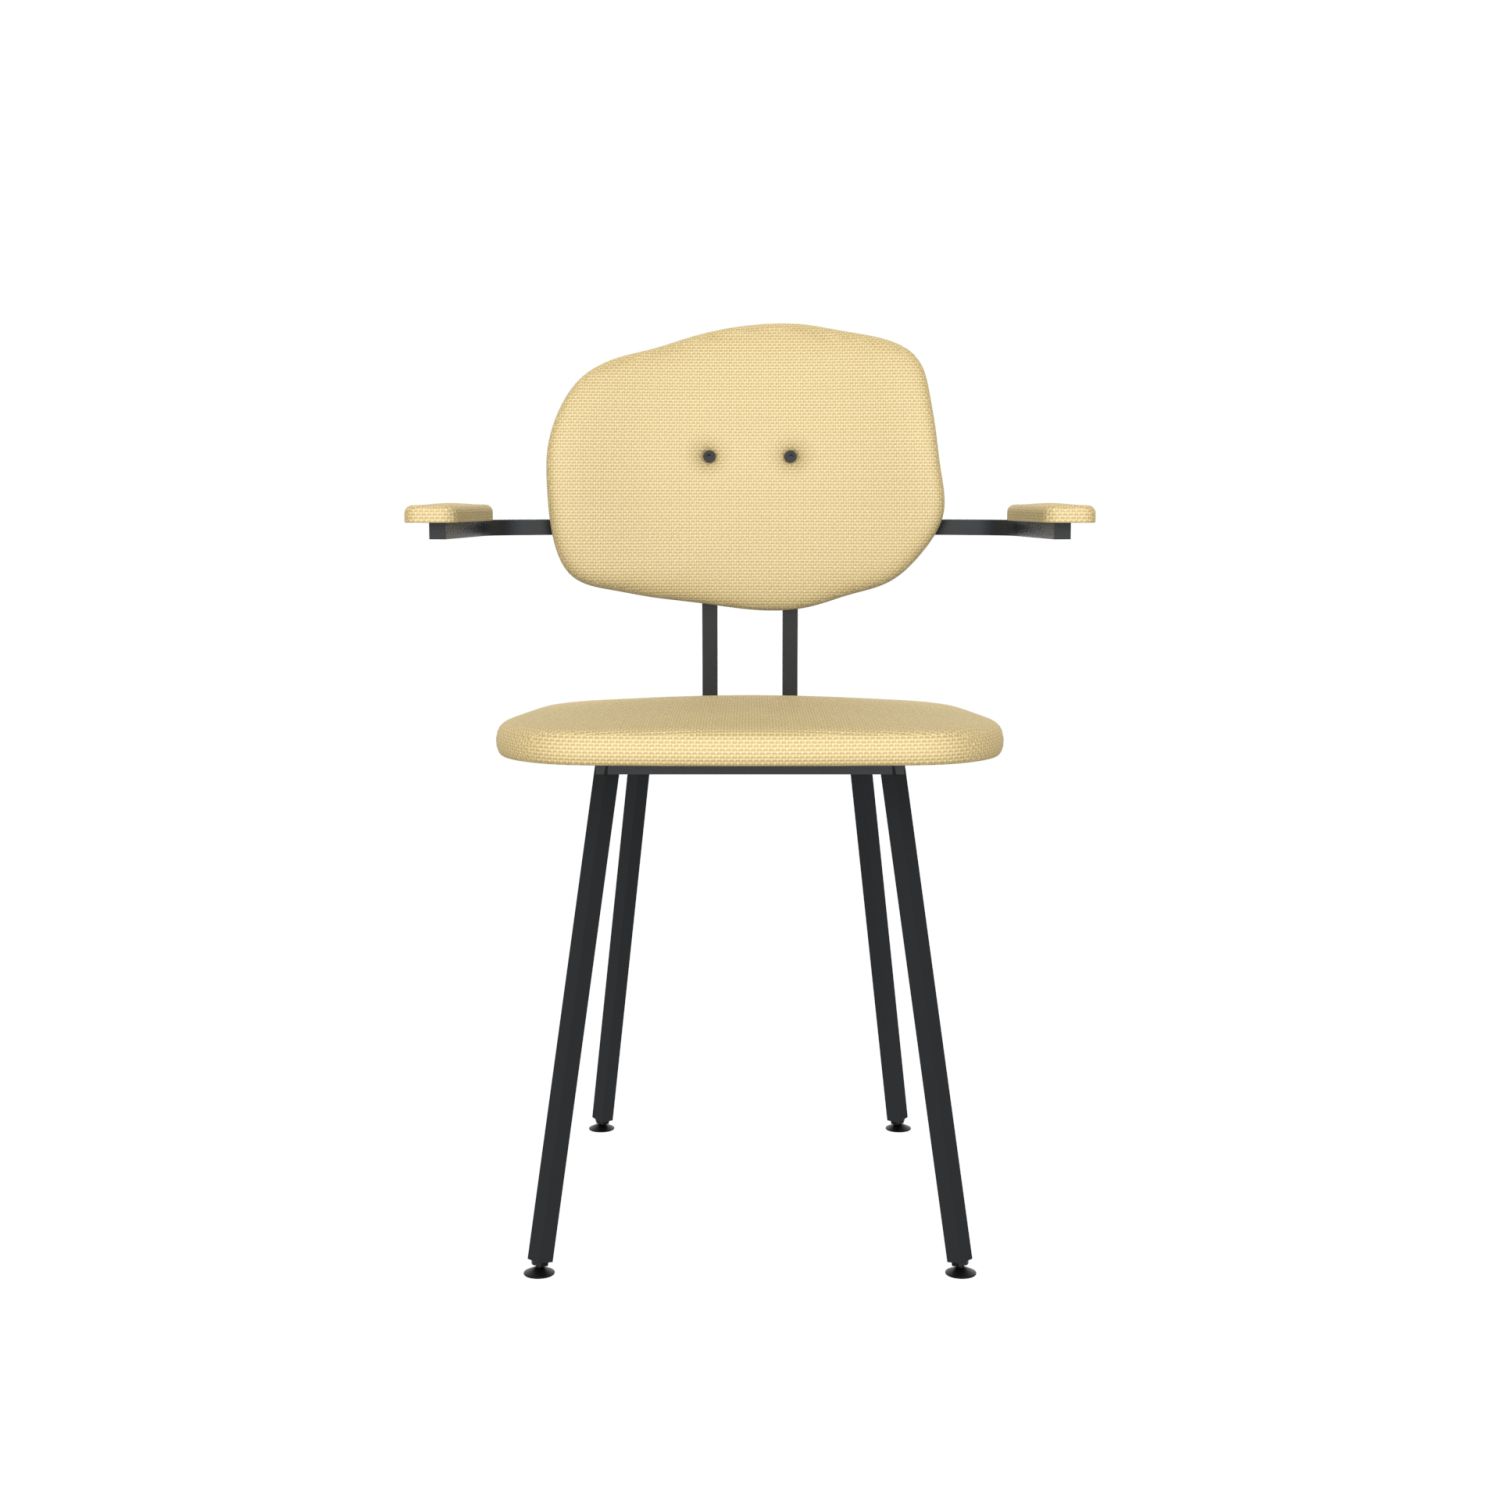 lensvelt maarten baas chair 102 not stackable with armrests backrest e light brown 141 black ral9005 hard leg ends